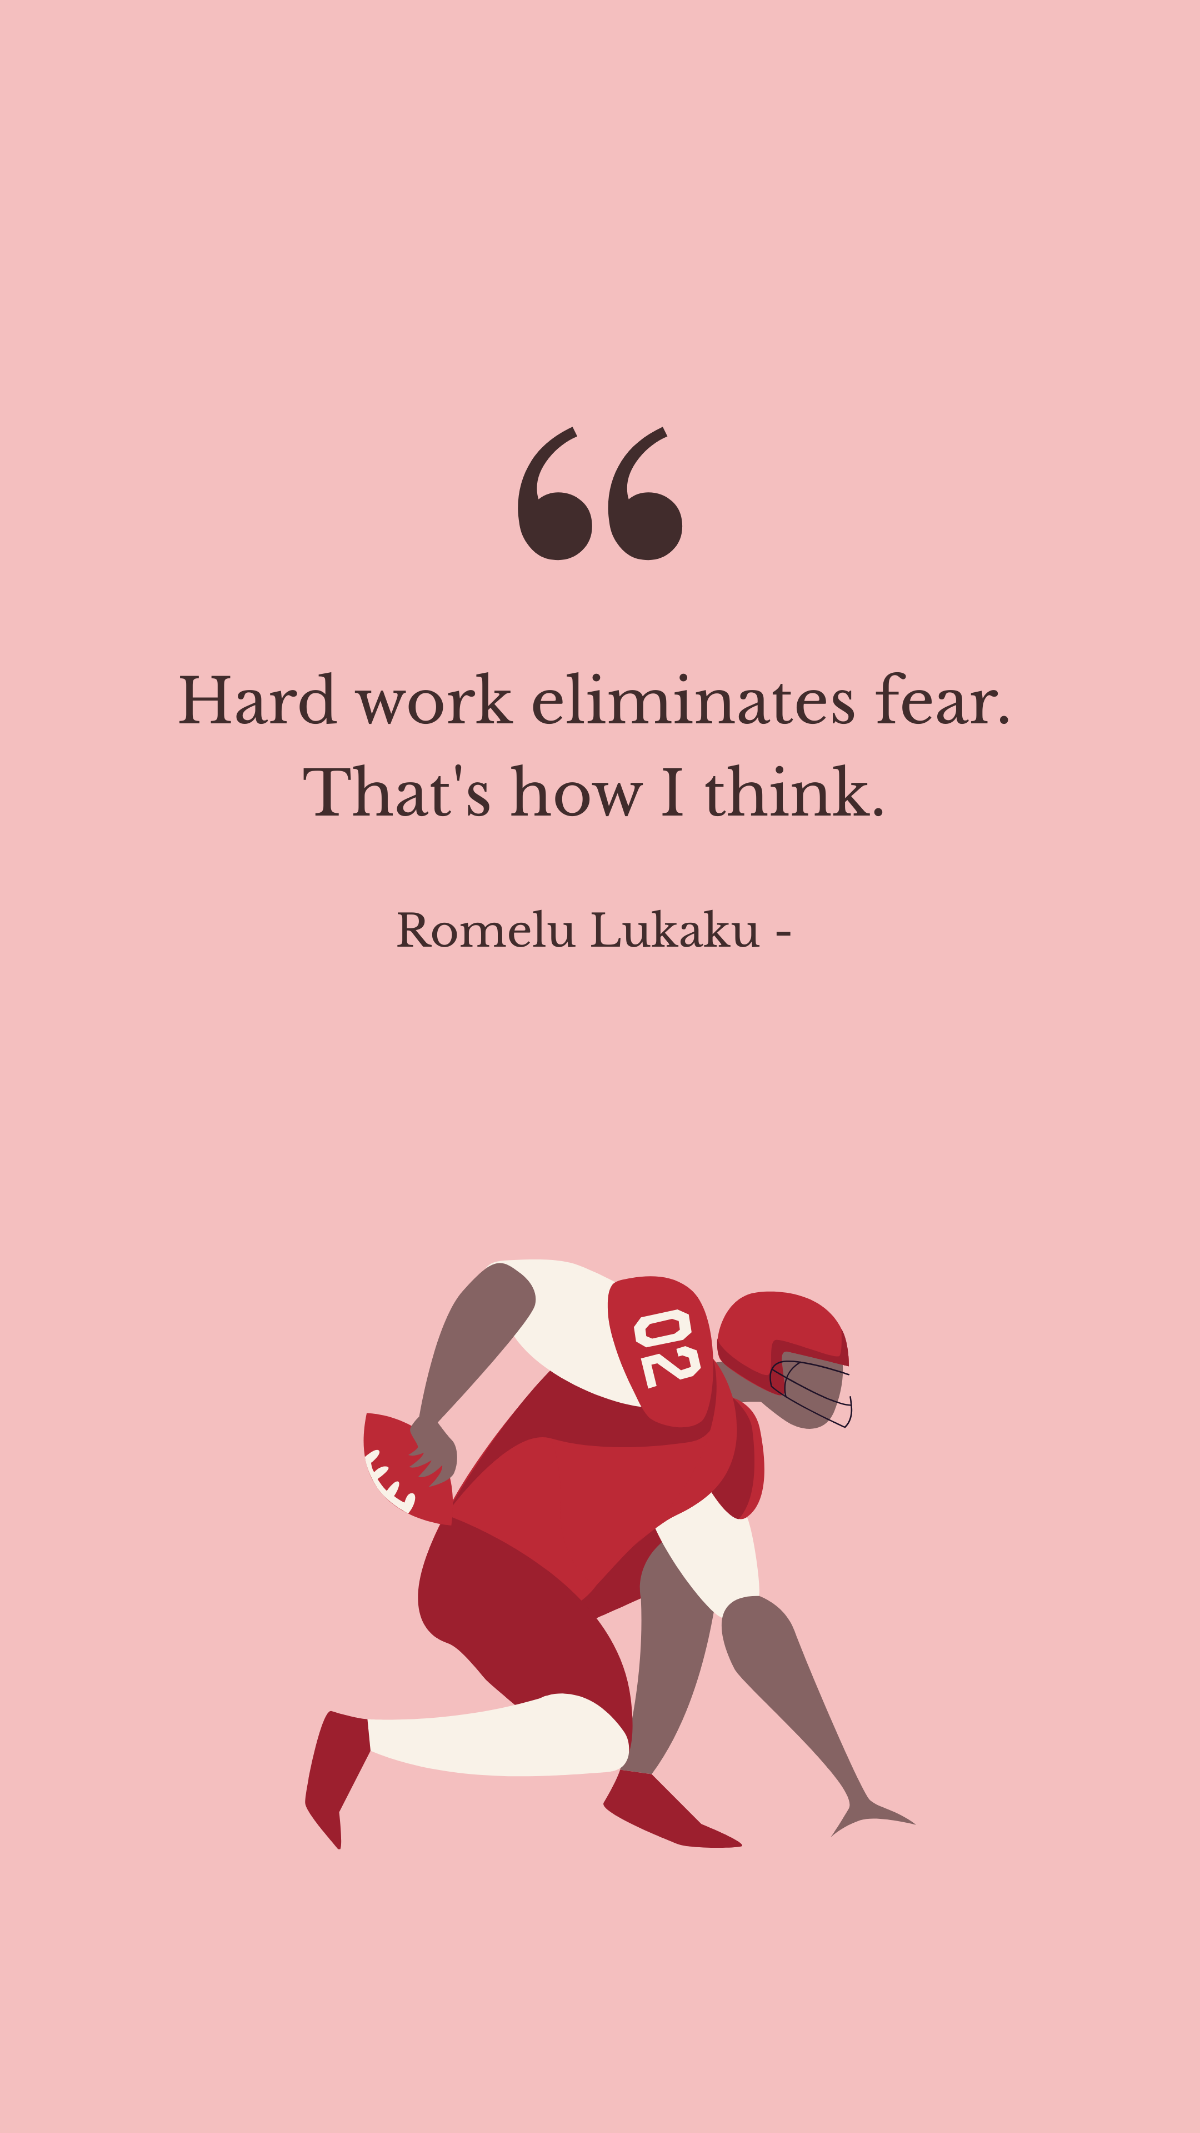 Romelu Lukaku - Hard work eliminates fear. That's how I think.